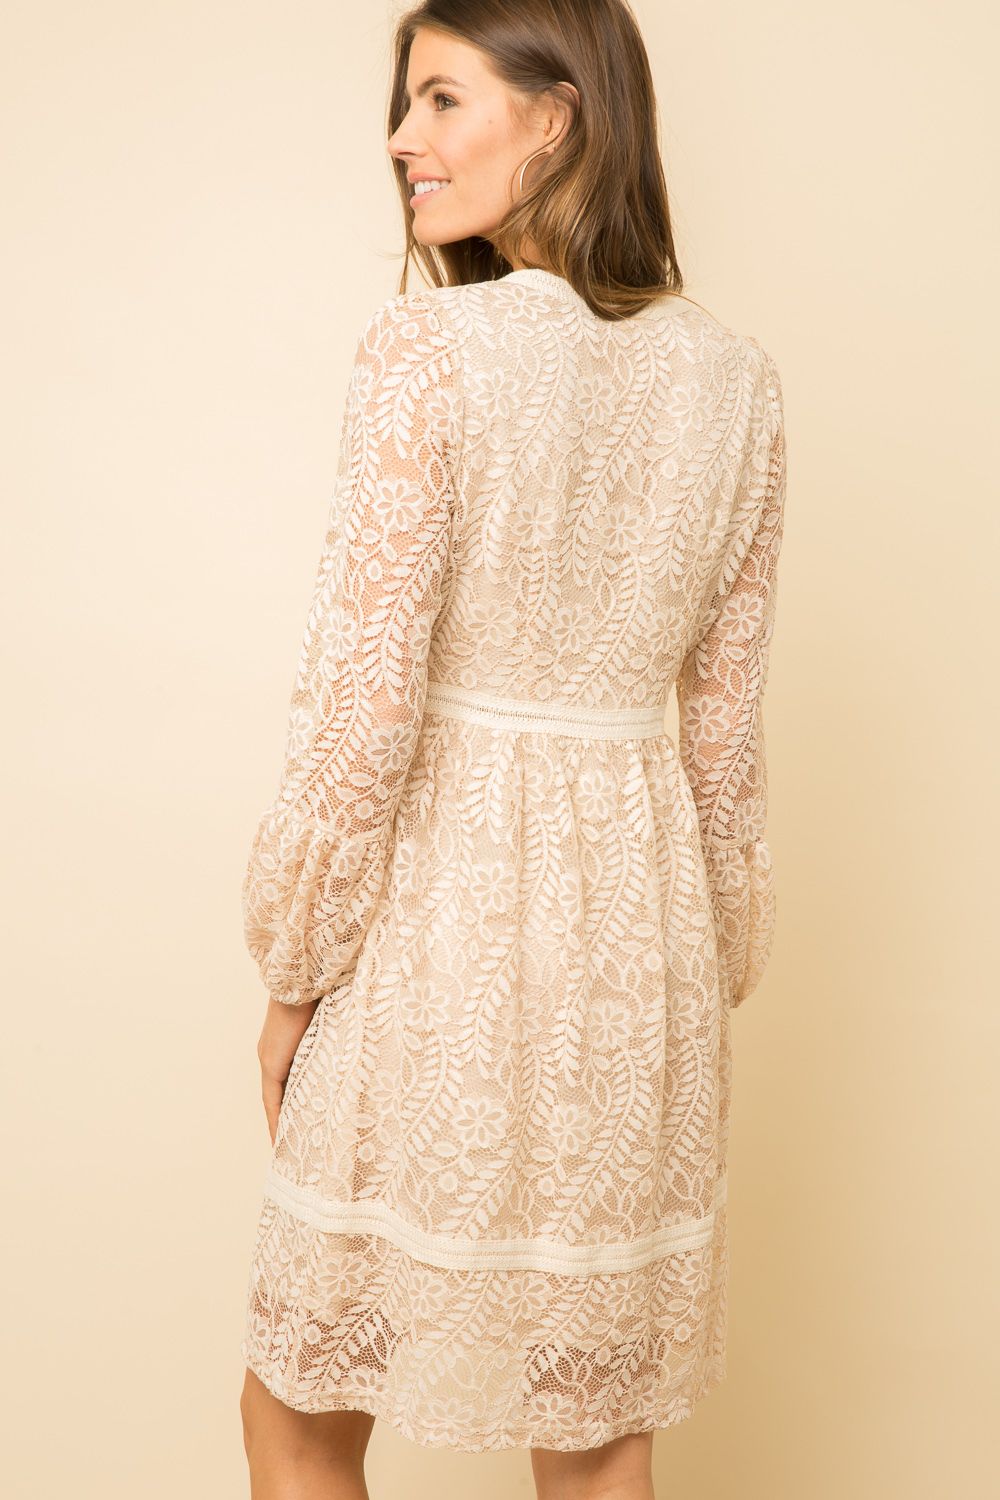 White/Cream Deep V-Neck Lace Dress - Wild Luxe Boutique